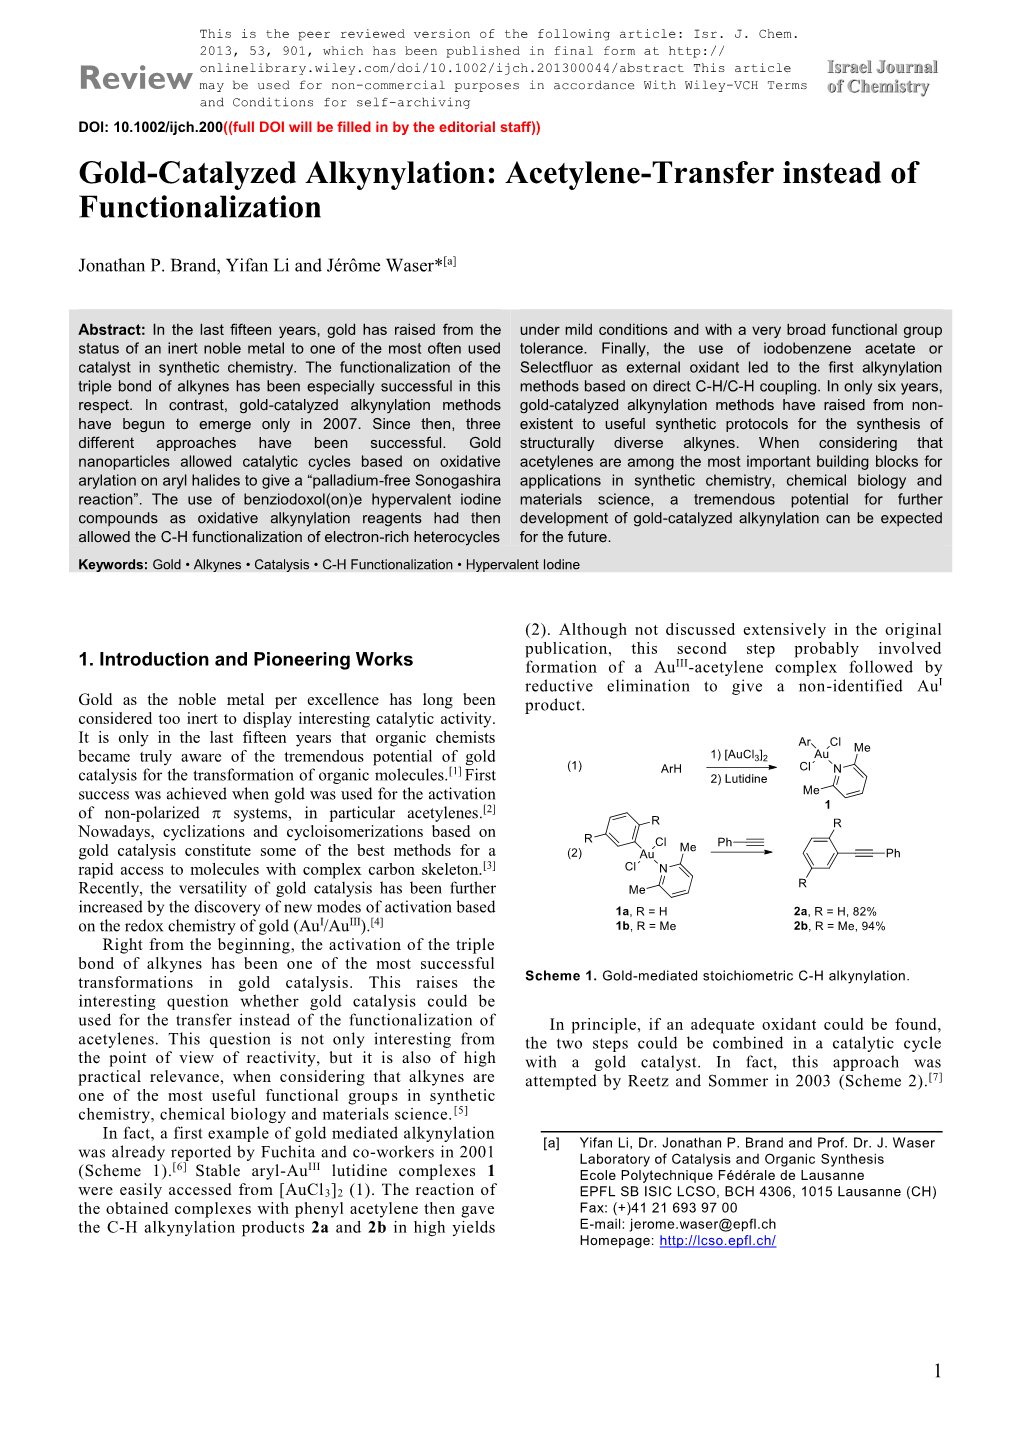 Gold-Catalyzed Alkynylation: Acetylene-Transfer Instead of Functionalization